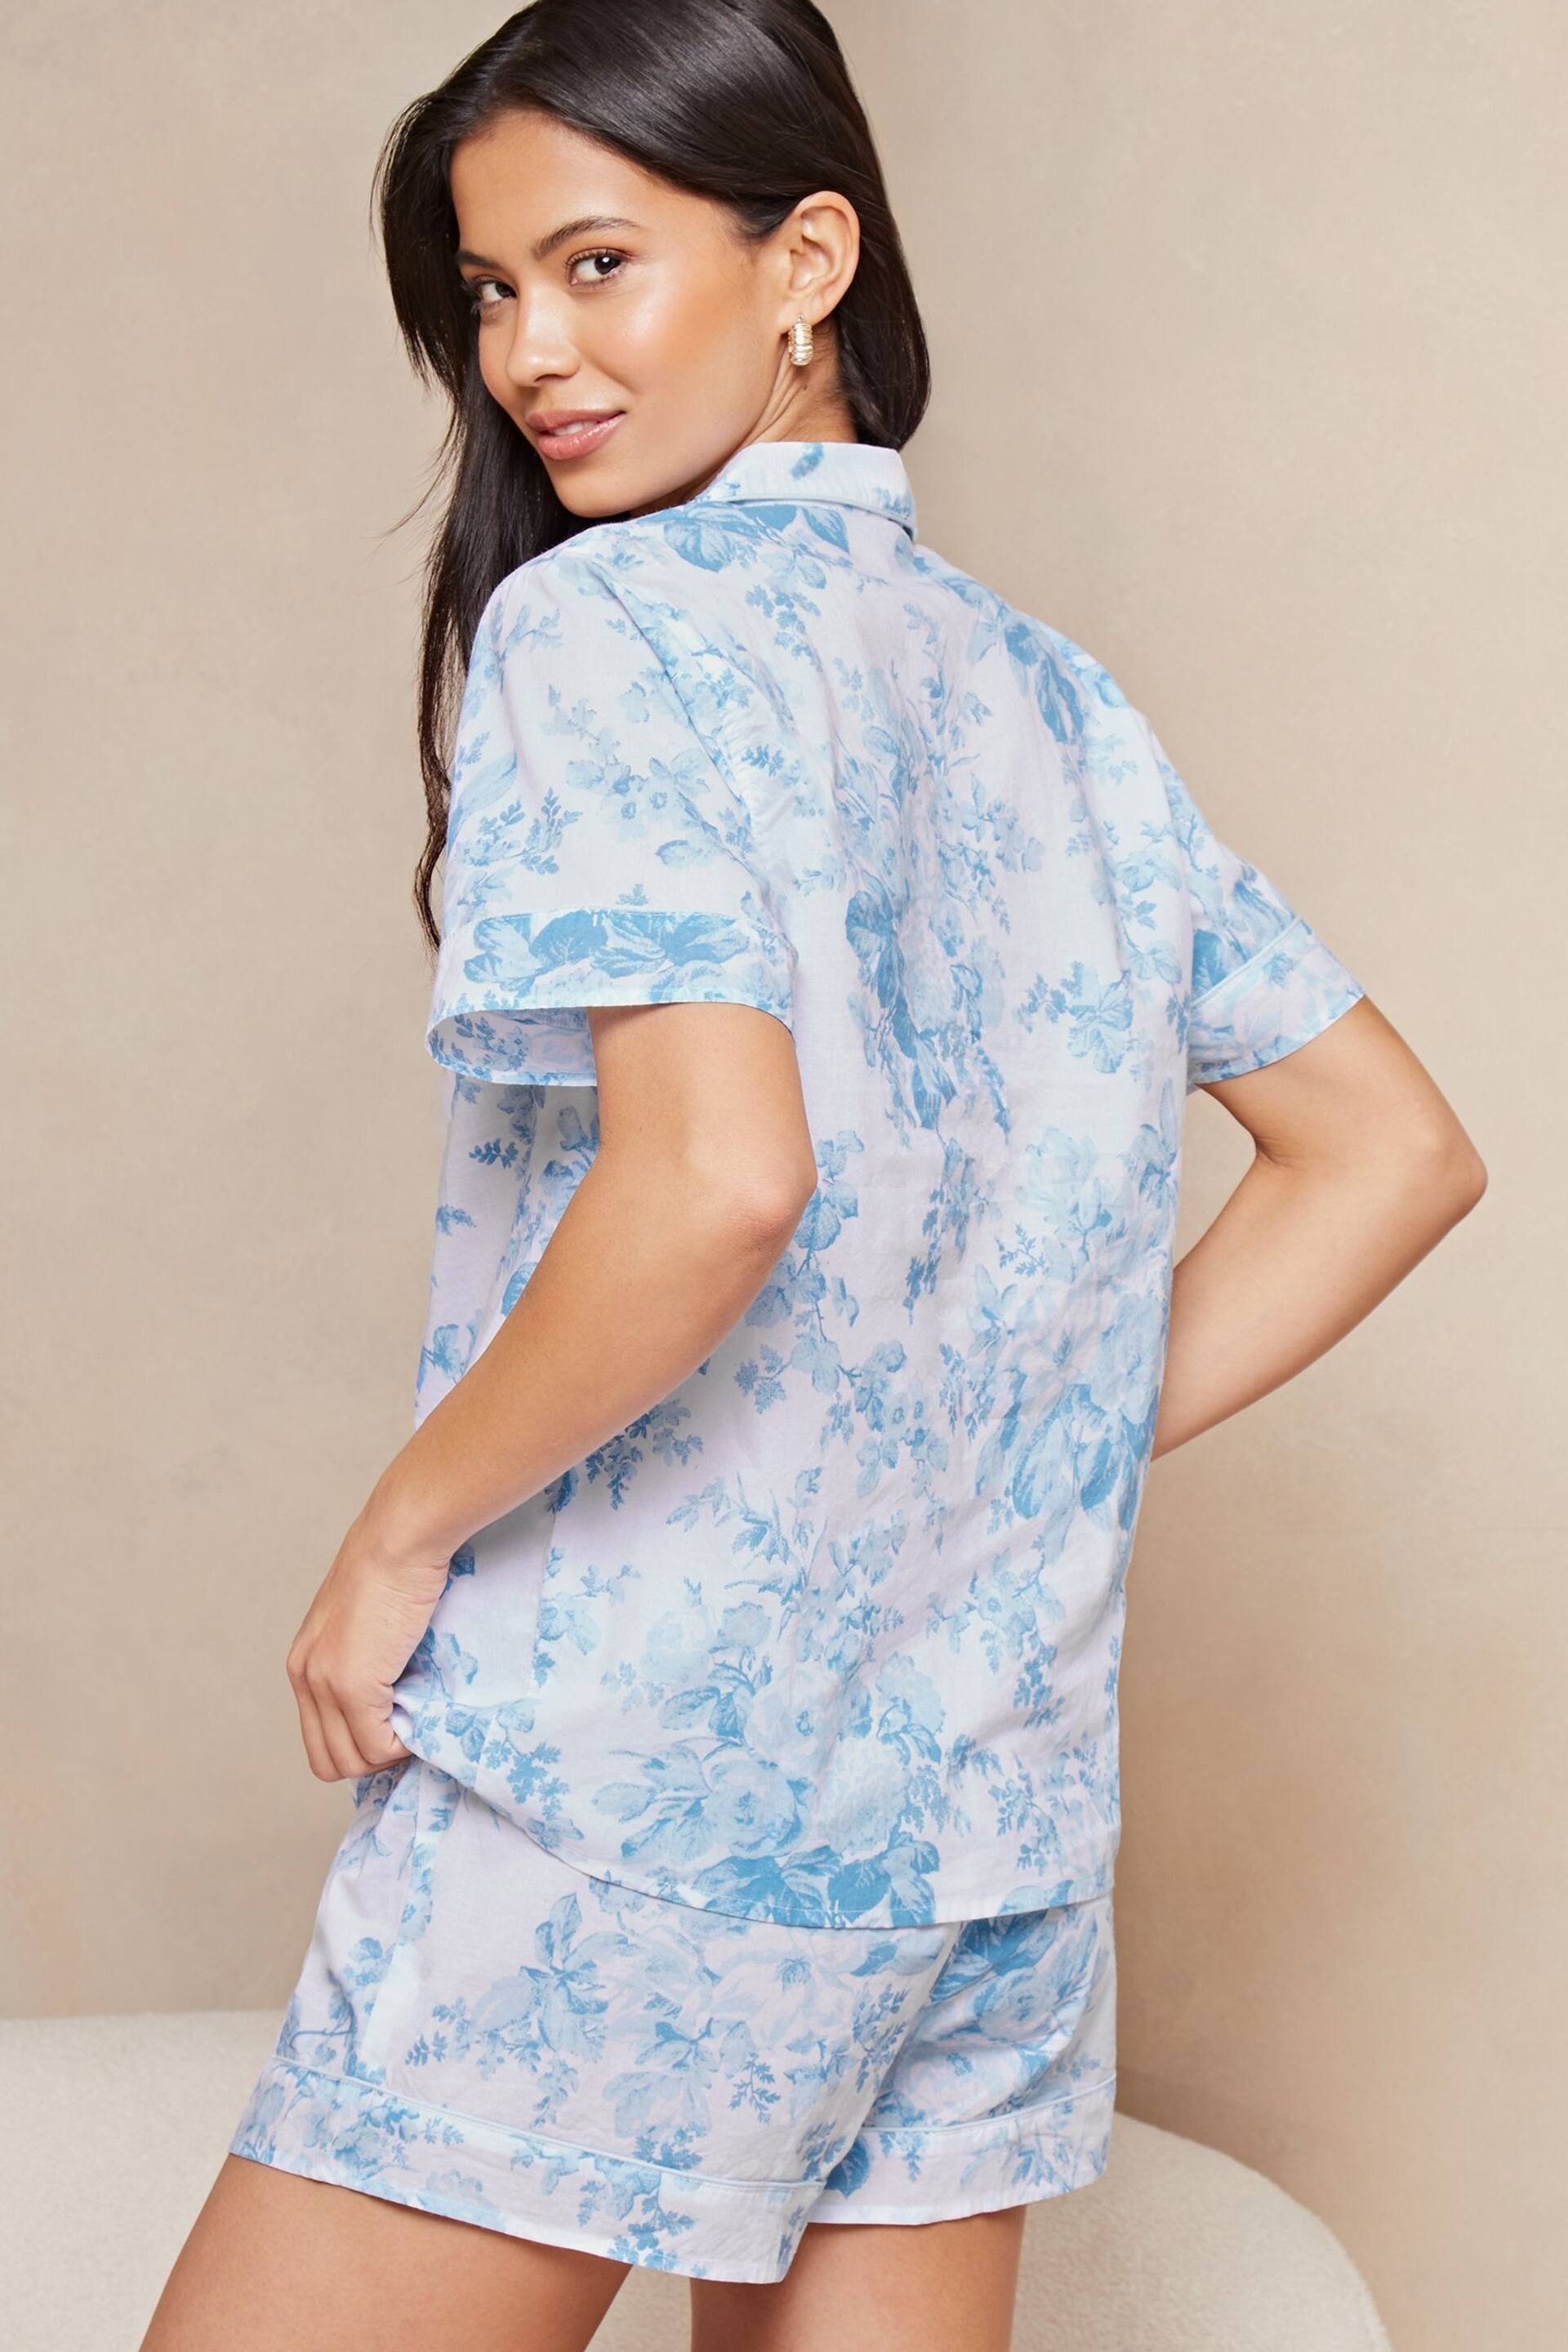 Lipsy White/Blue Print Button Through Short Sleeve Shorts Pyjamas - Image 3 of 4